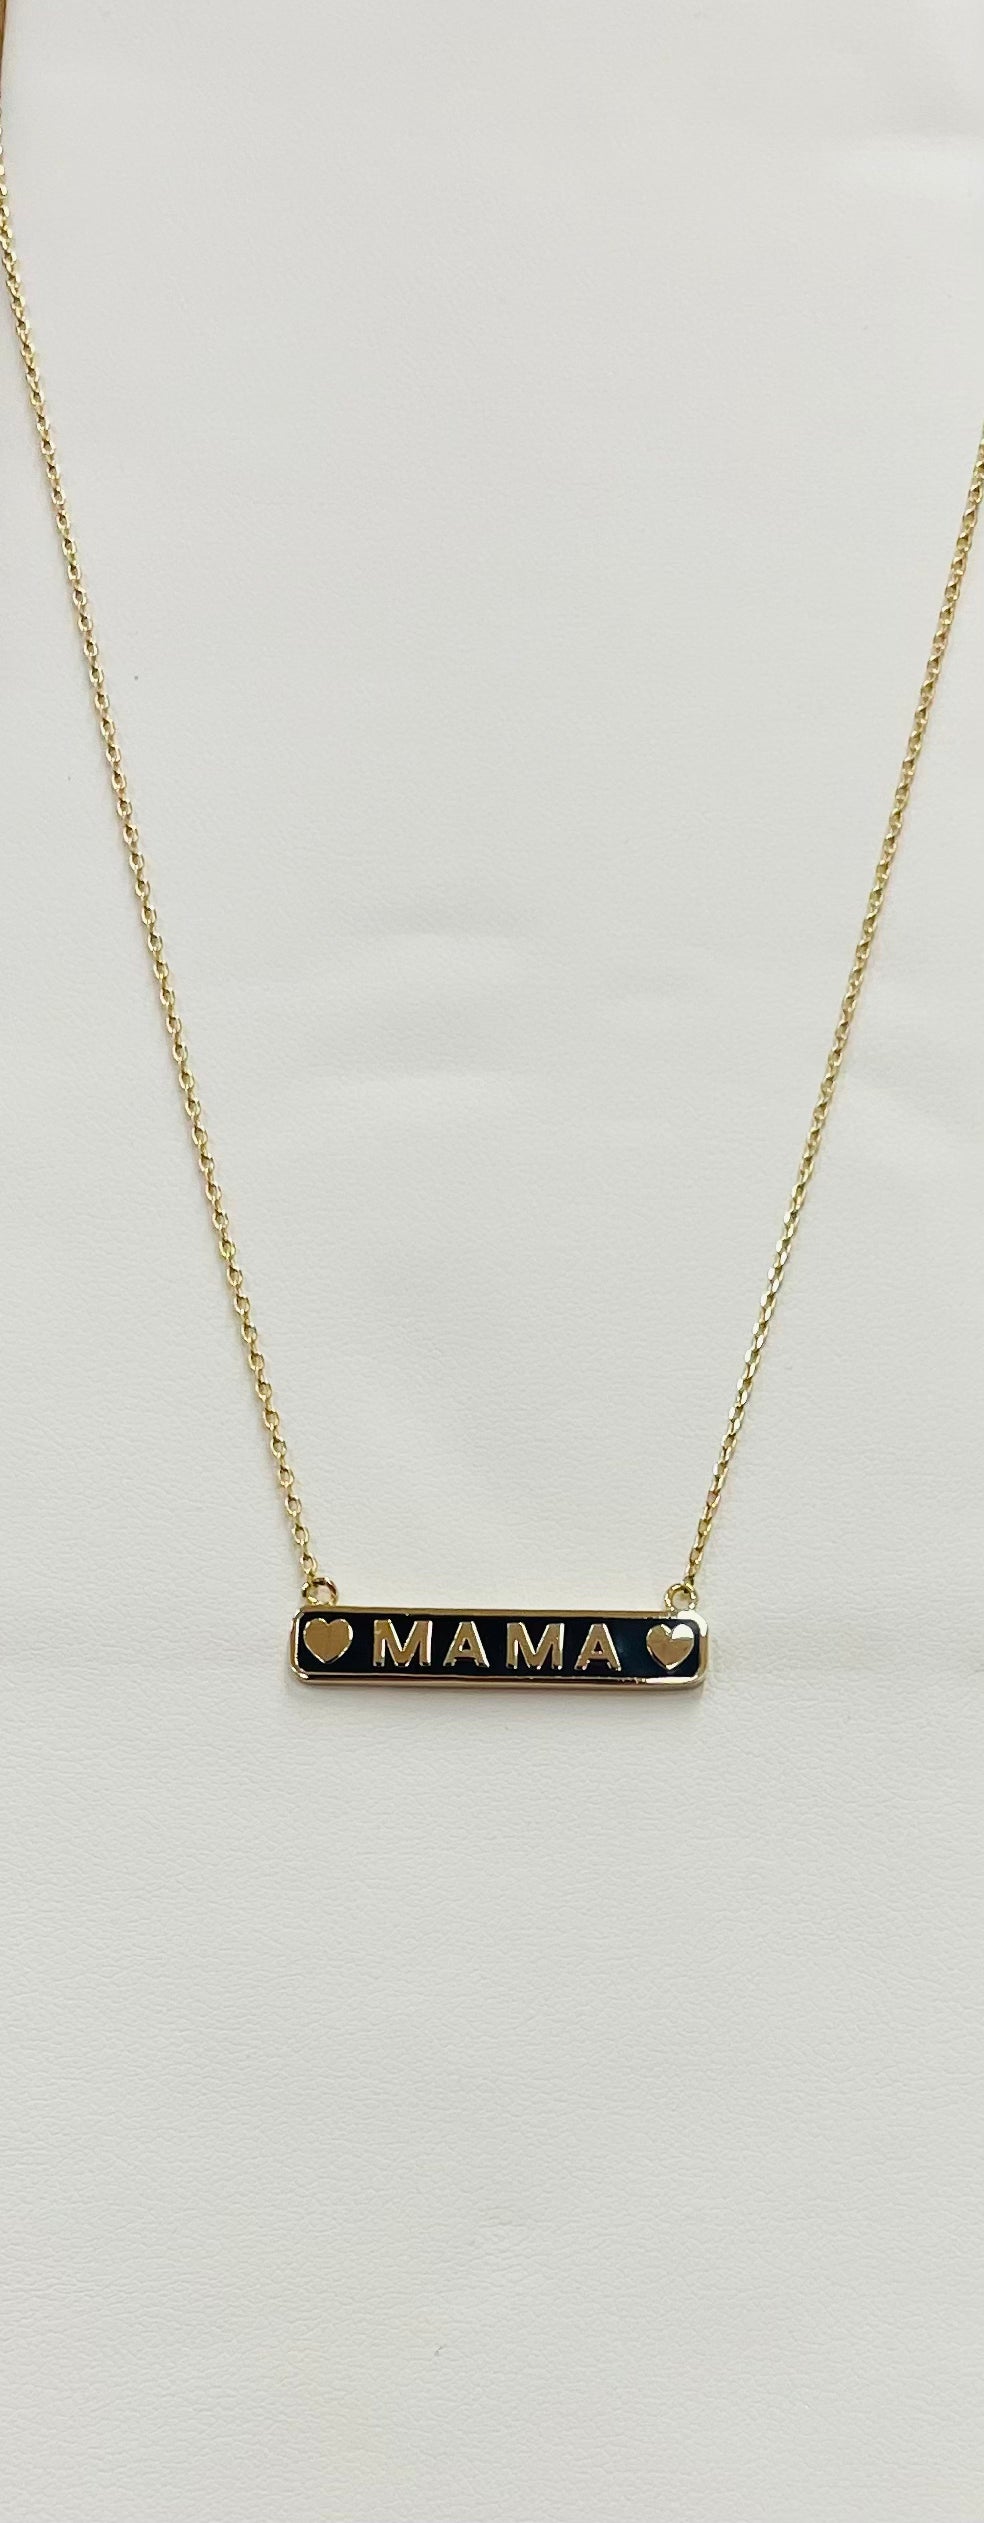 Square mama necklace